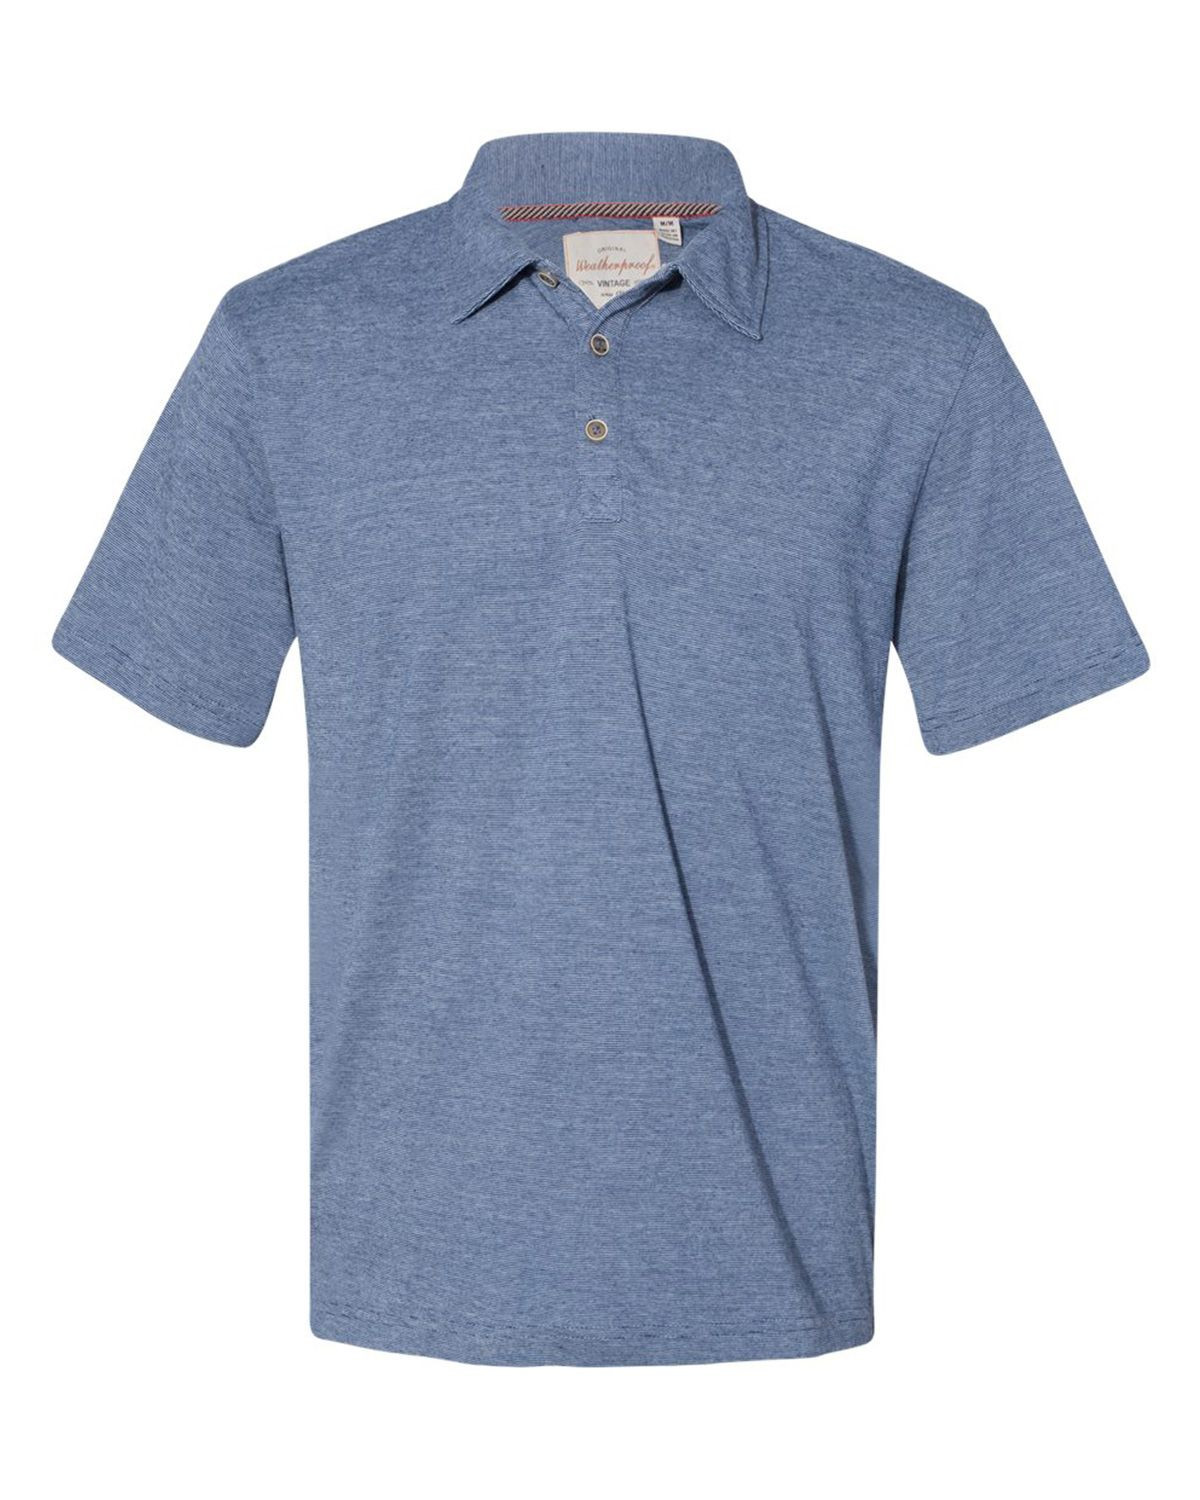 Weatherproof 193626 Men's Vintage Microstripe Sport Shirt - Blue - S #vintage